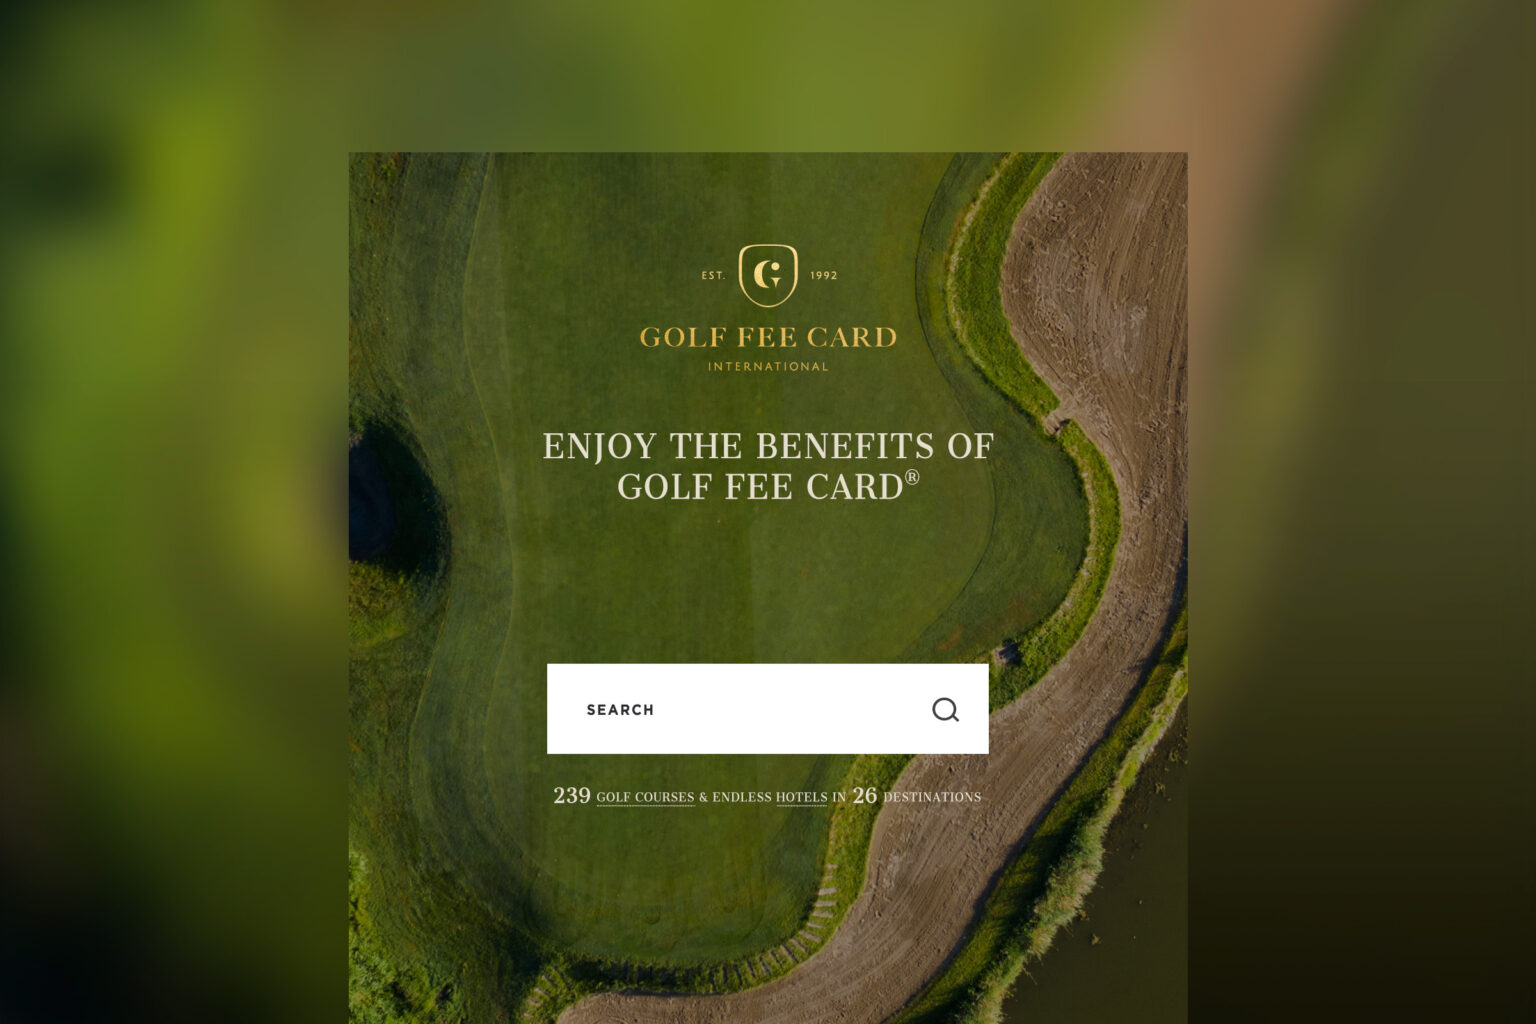 golf fee card website design thumbs kommigraphics